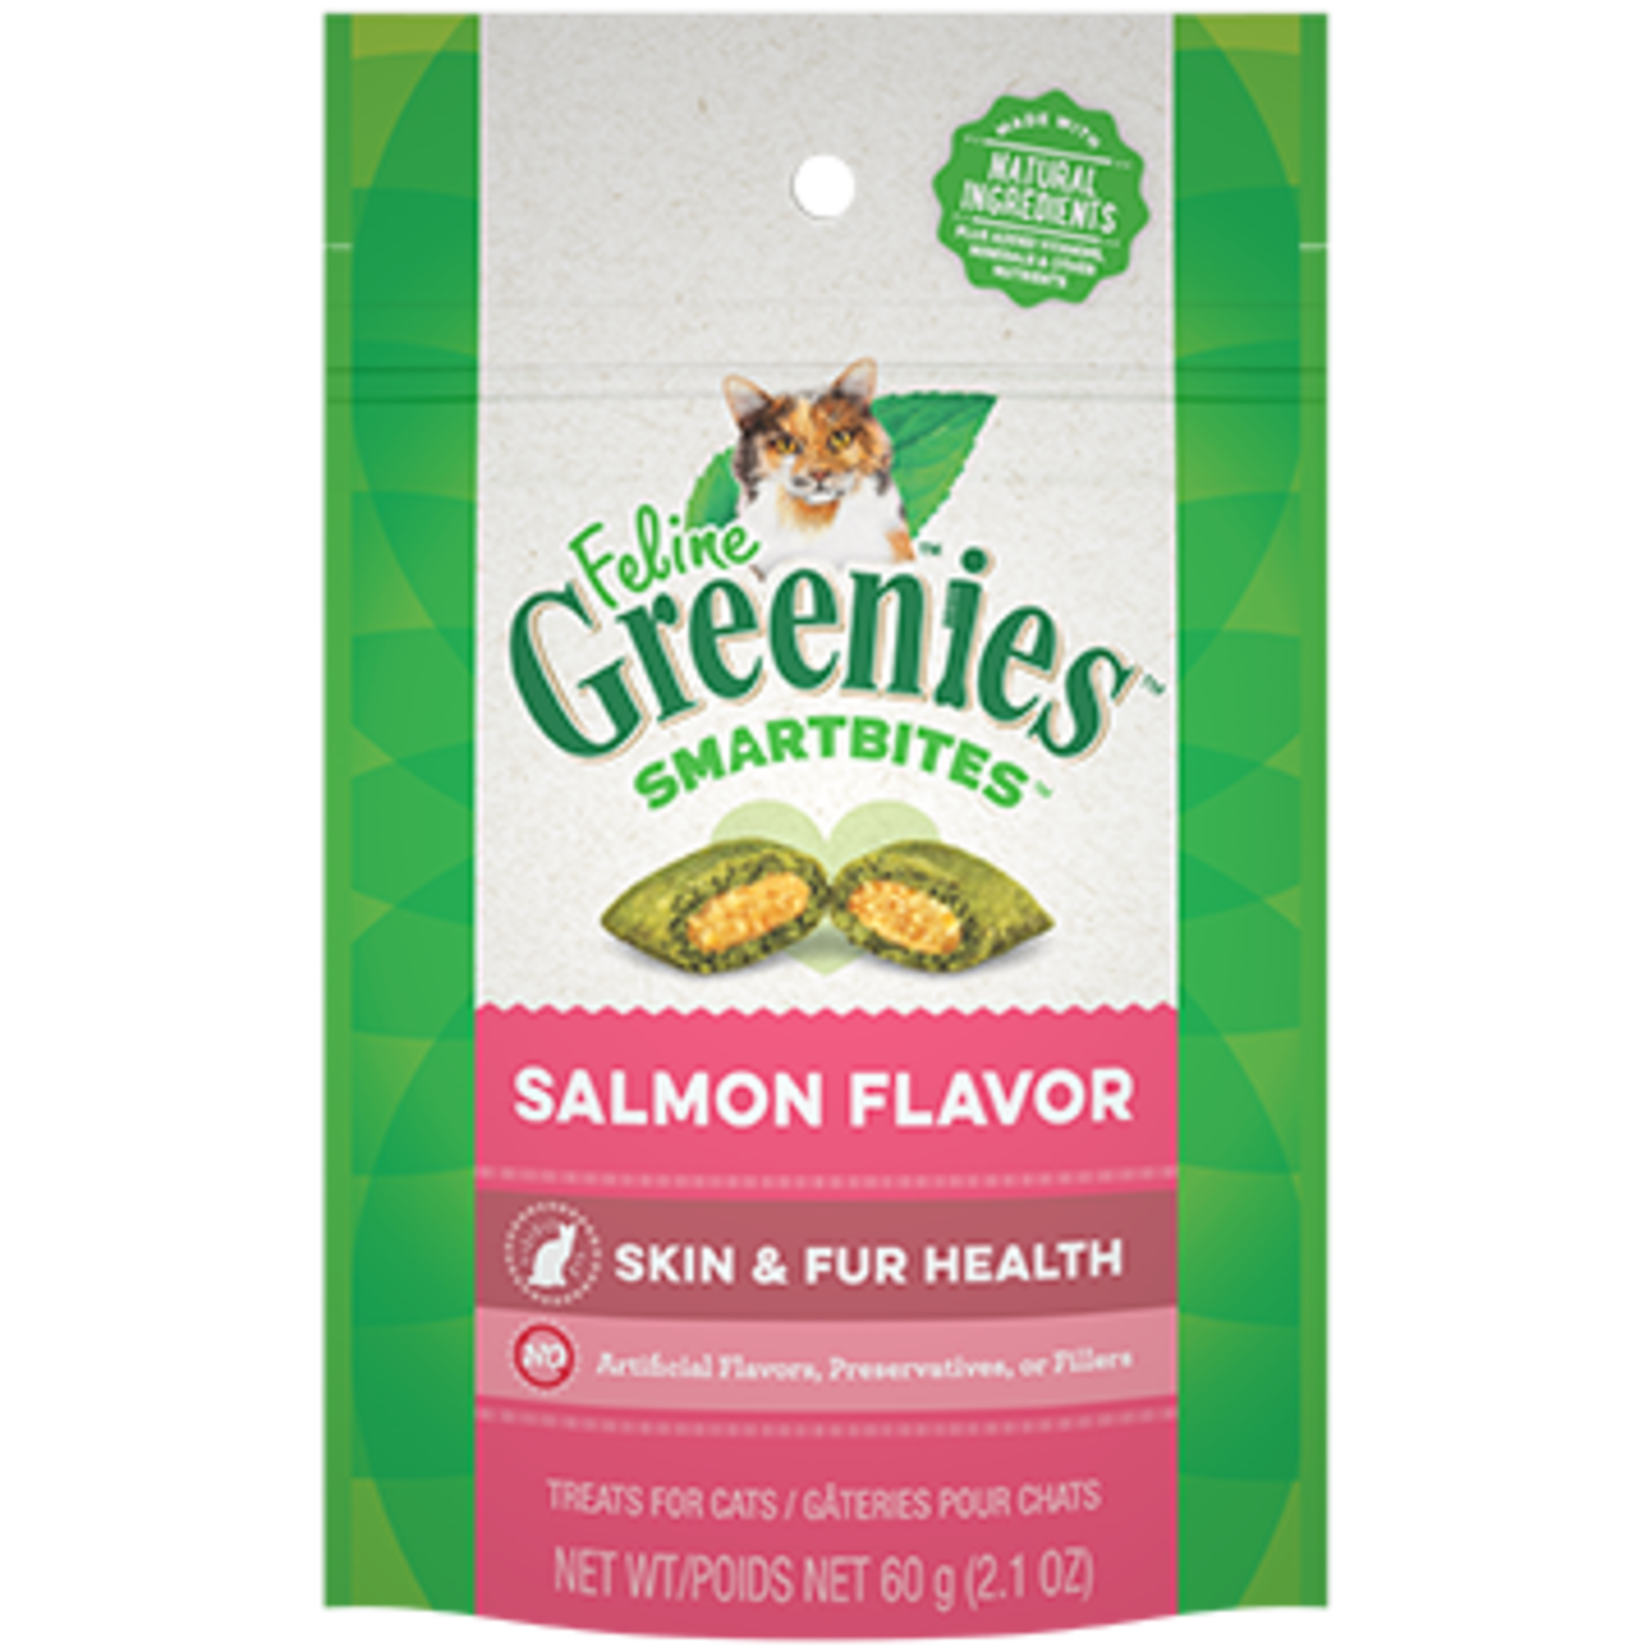 Greenies Feline Greenies Smartbites Cat Treats Skin & Fur Health Salmon Flavor 2.1oz